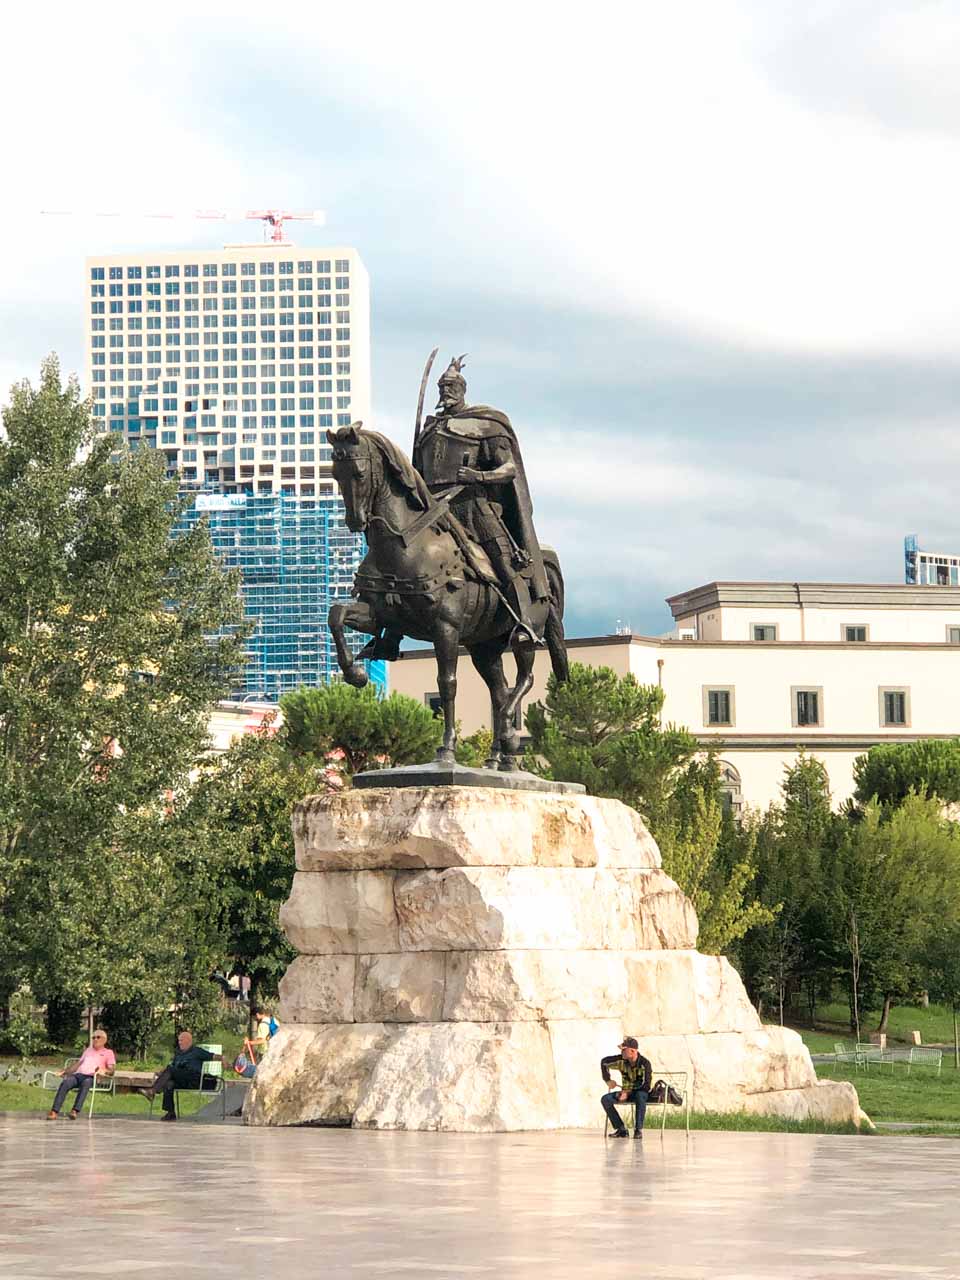 Skanderbeg Monument / Statue in Tirana, Albania